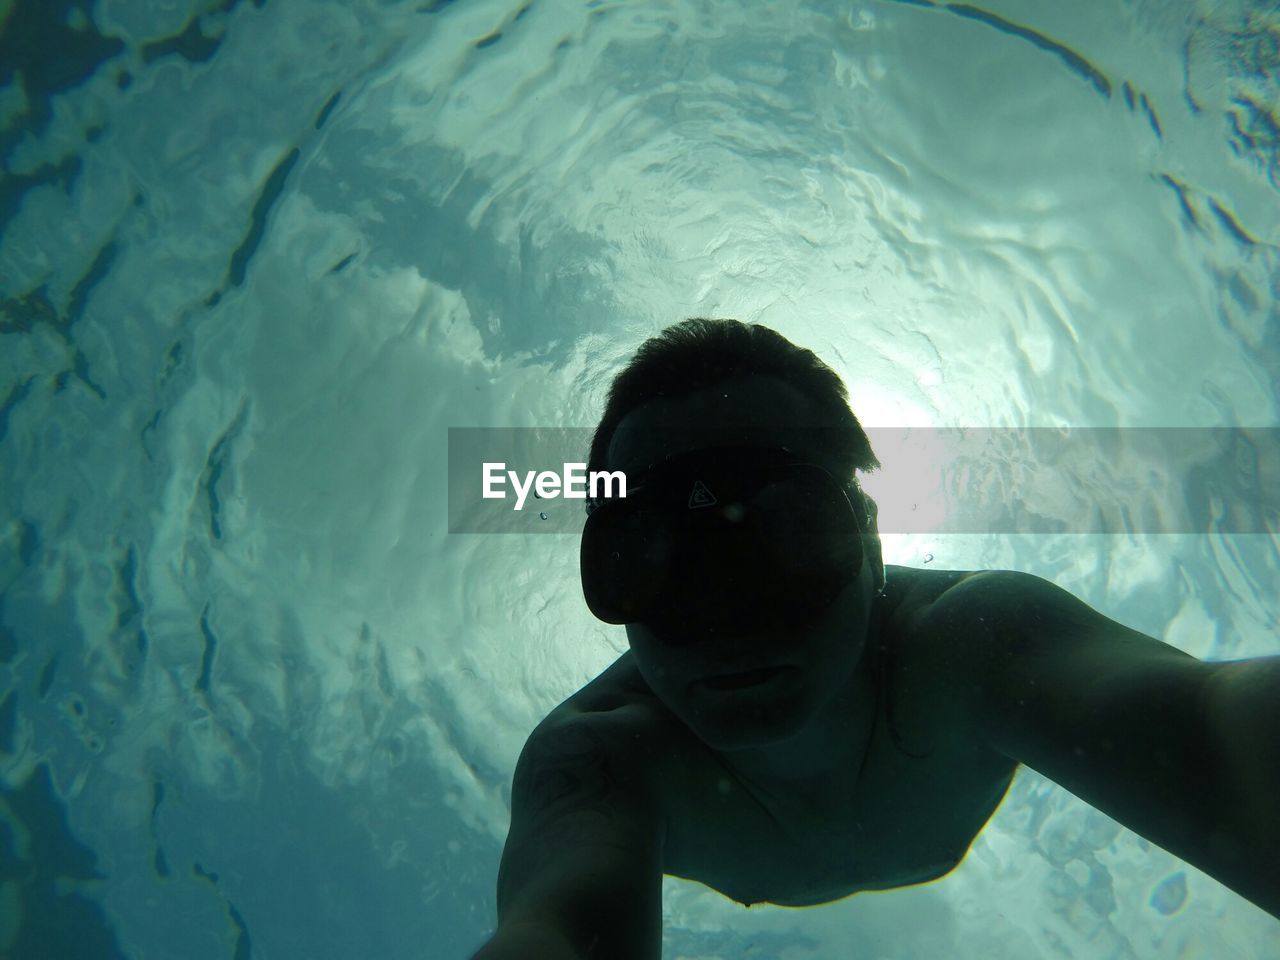 Self portrait of man free diving undersea